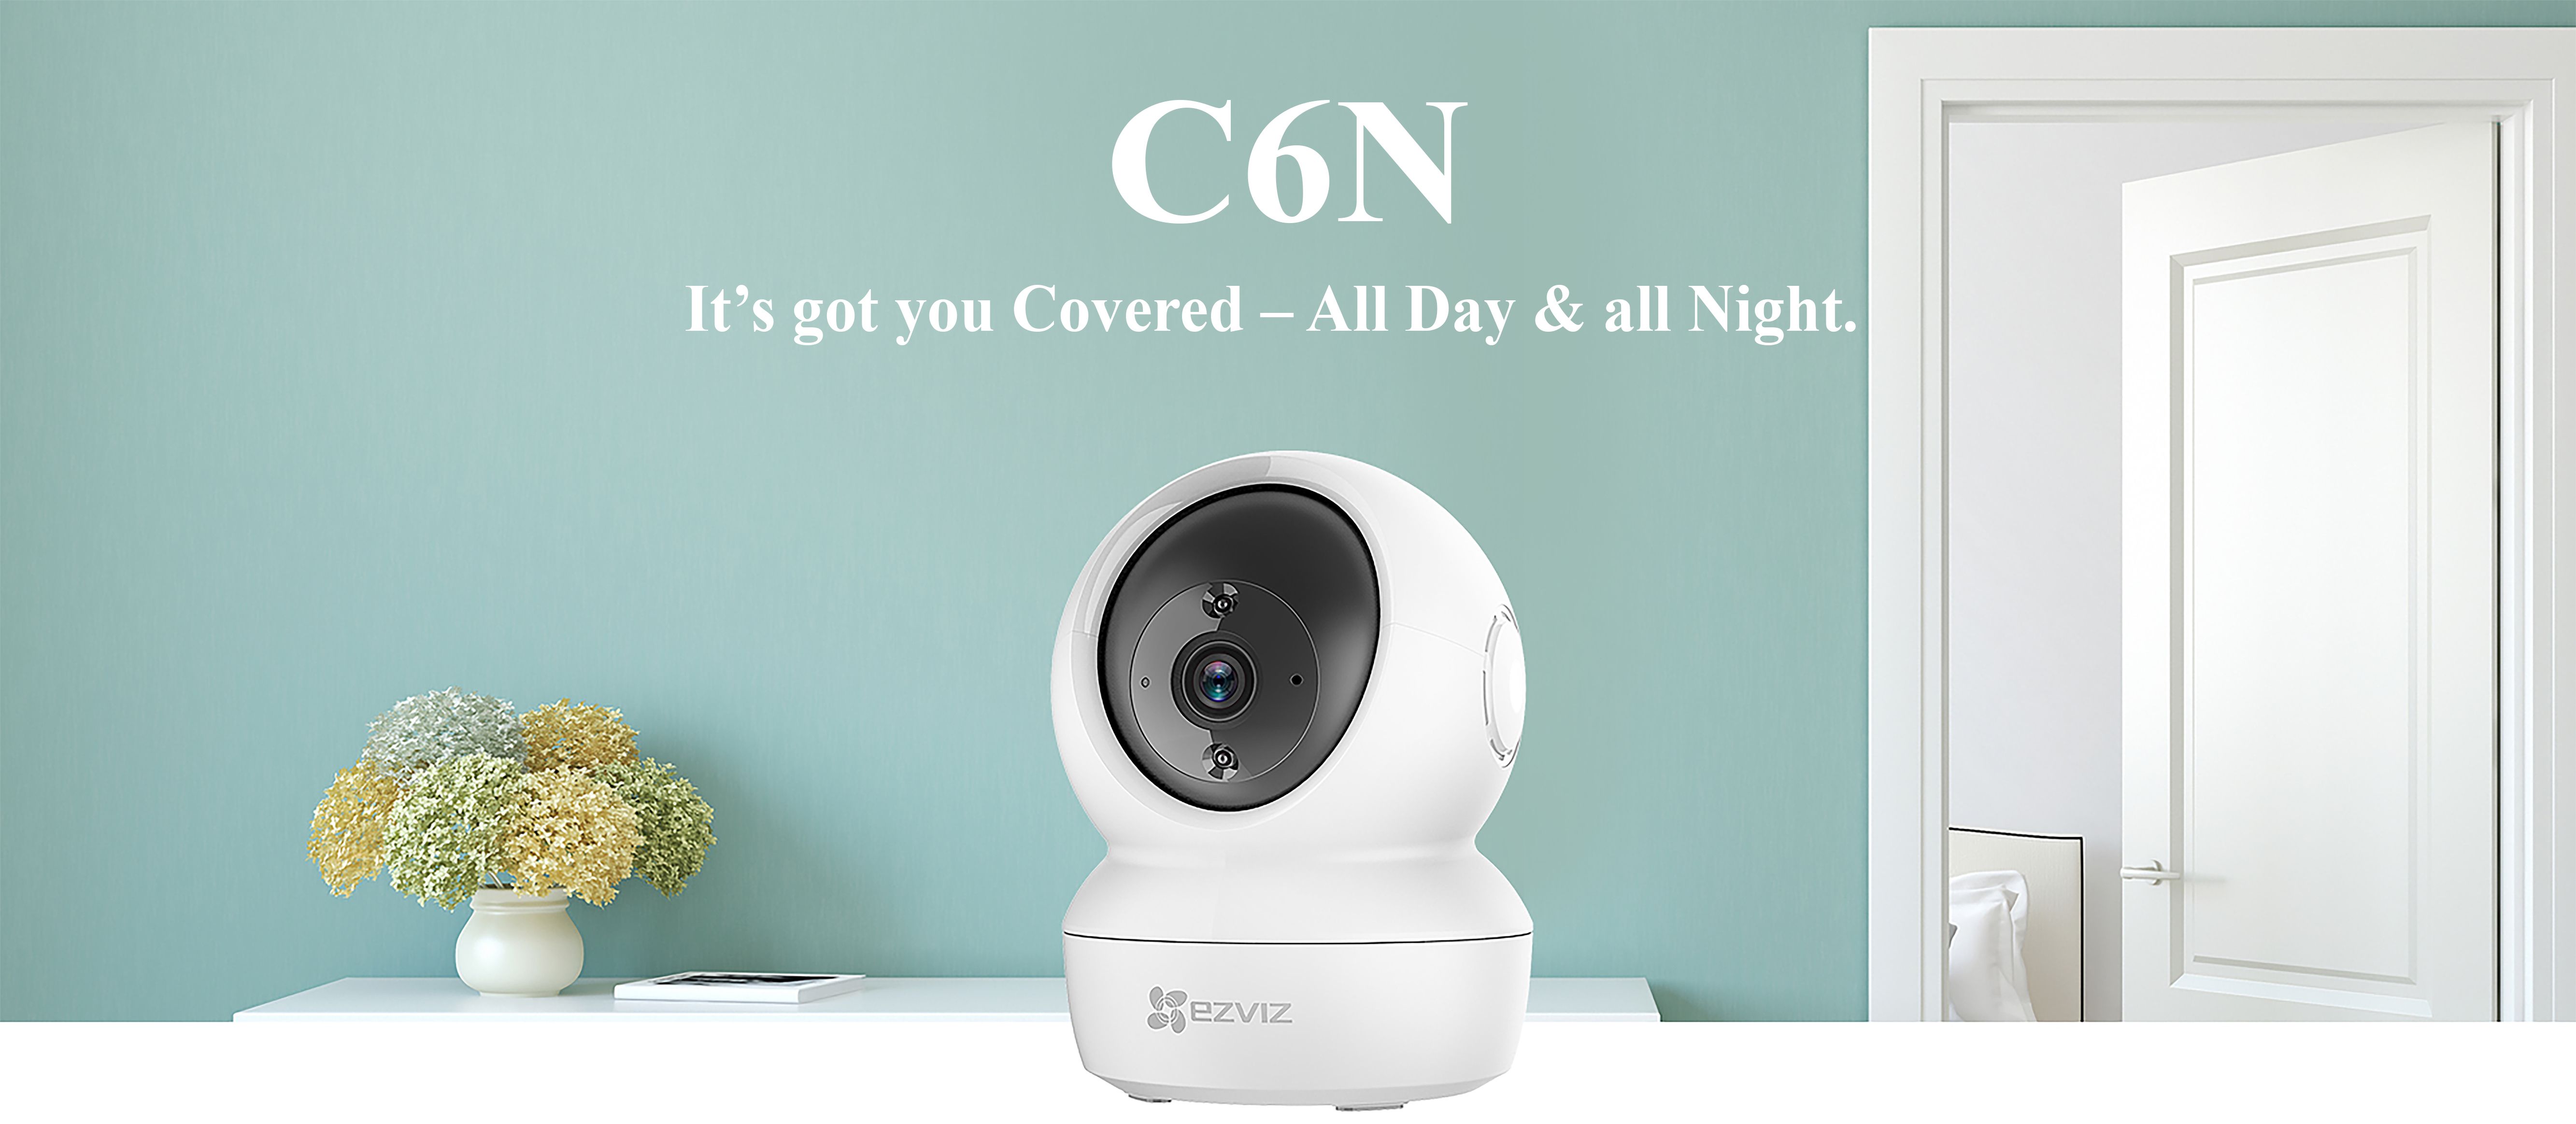 EZVIZ C1C Indoor Wi-Fi Camera review: a full-featured budget security camera